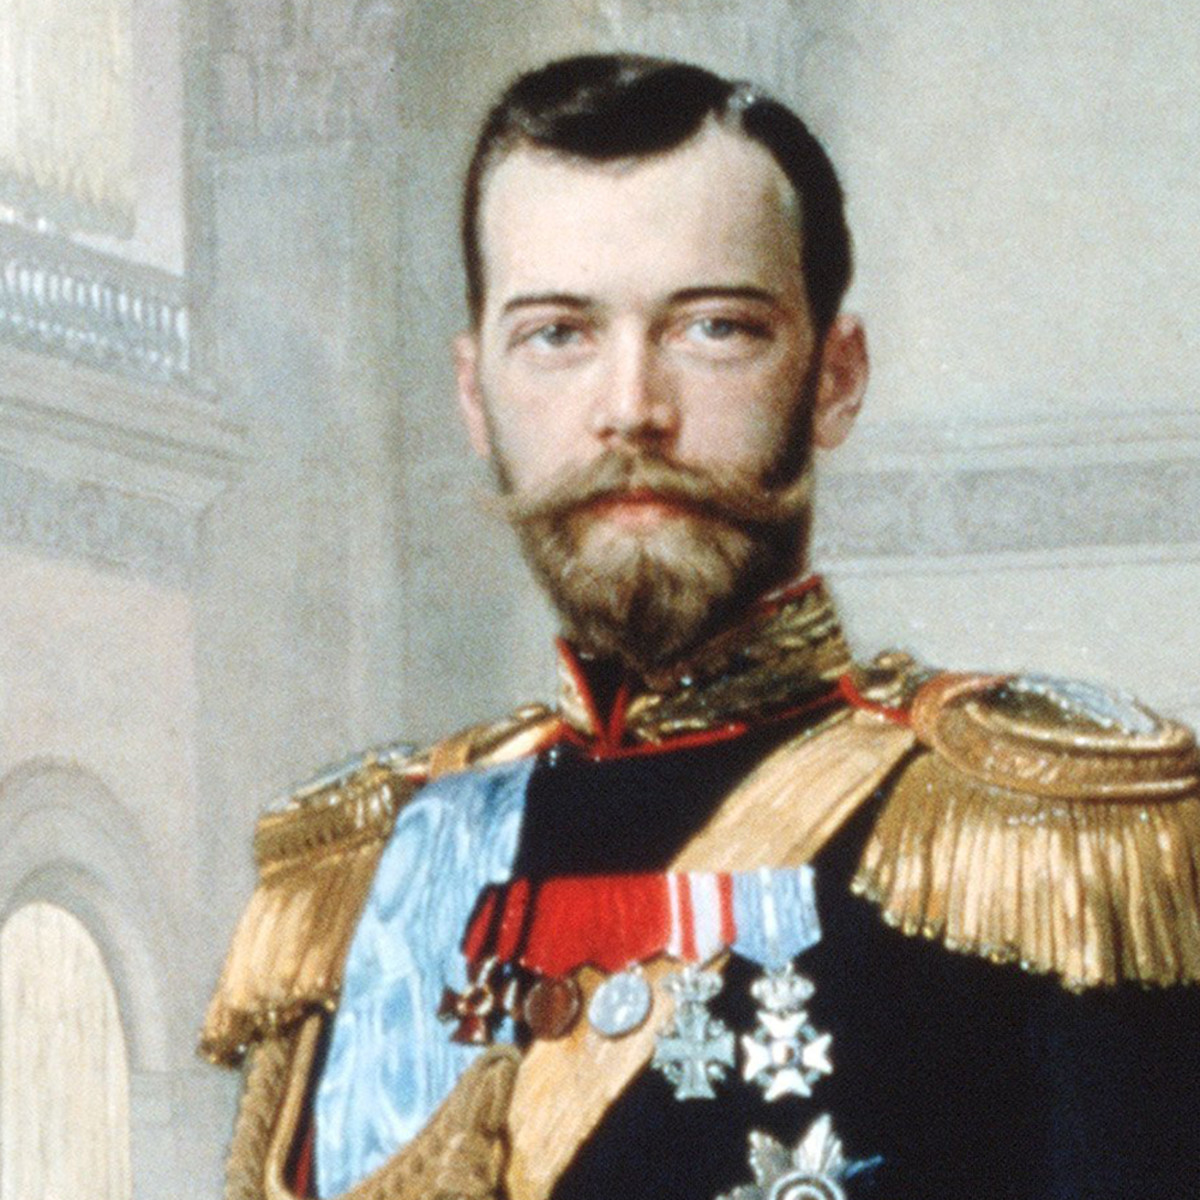 1894 Nicholas II became Tsar of Russia